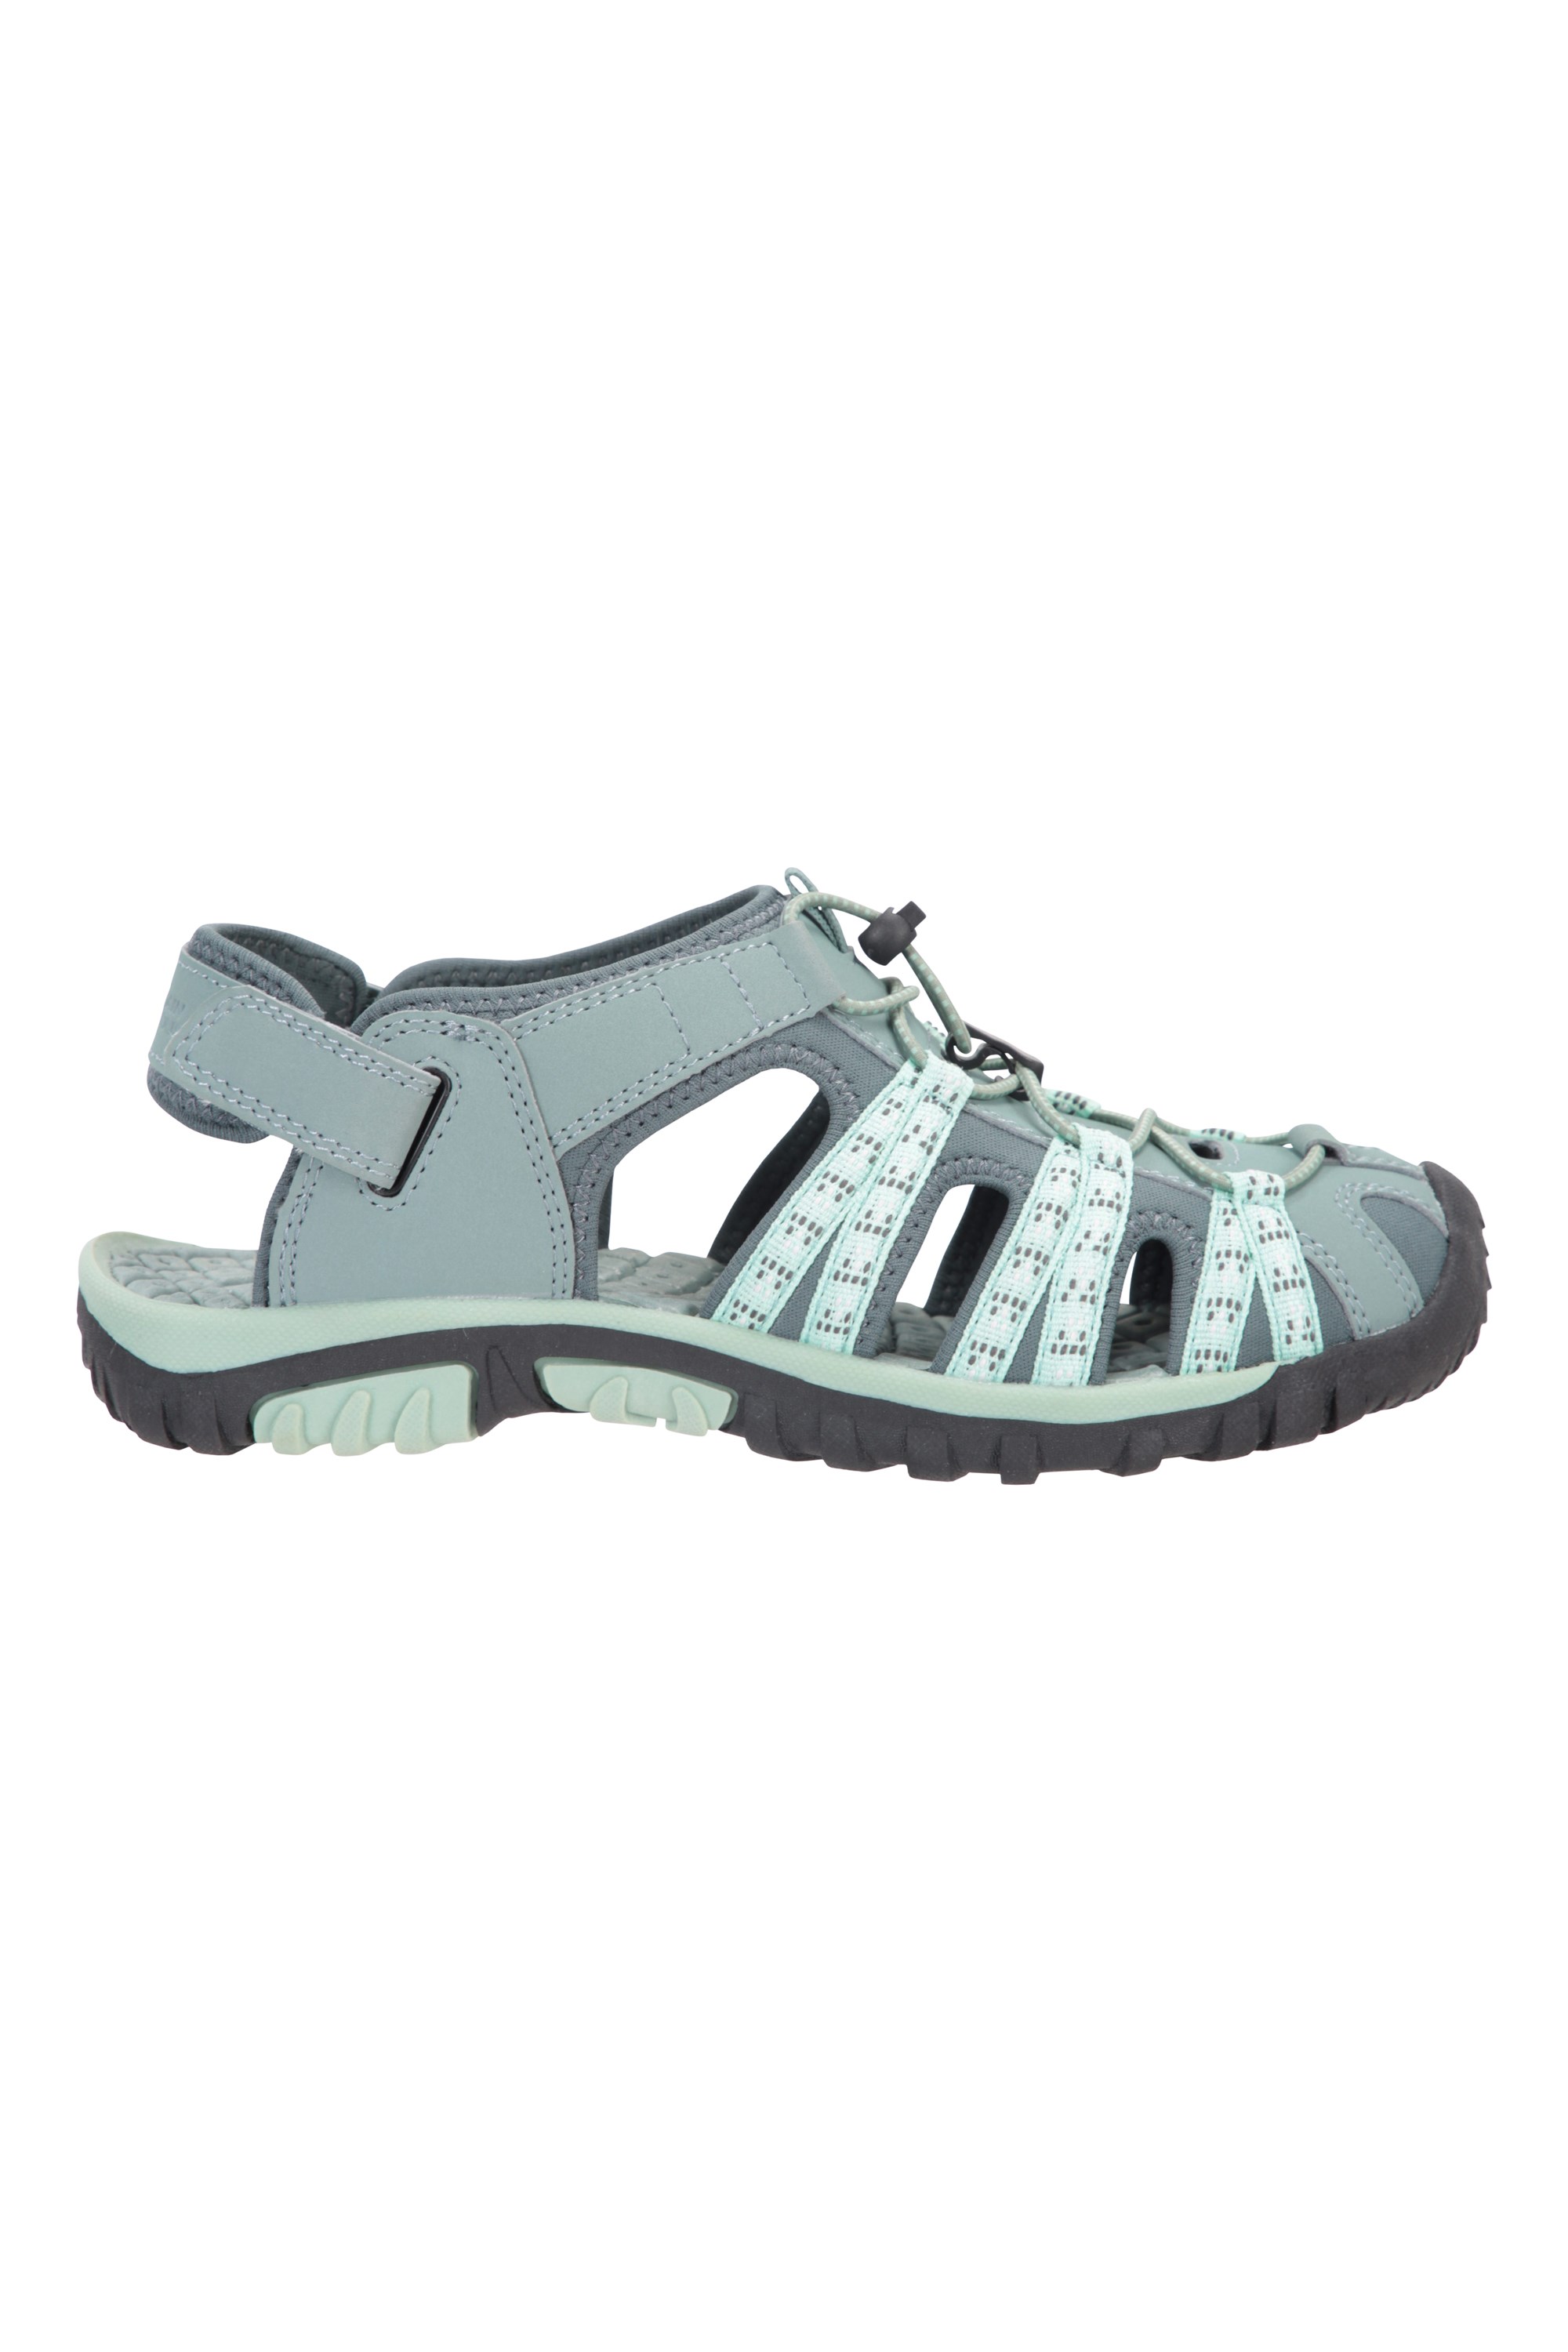 Neoprene Lined Phylon Midsole Rubber Outsole Lightweight Ladies Summer Shoes Adjustable Straps Beach Walking Footwear Mountain Warehouse Hampstead Womens Sandals